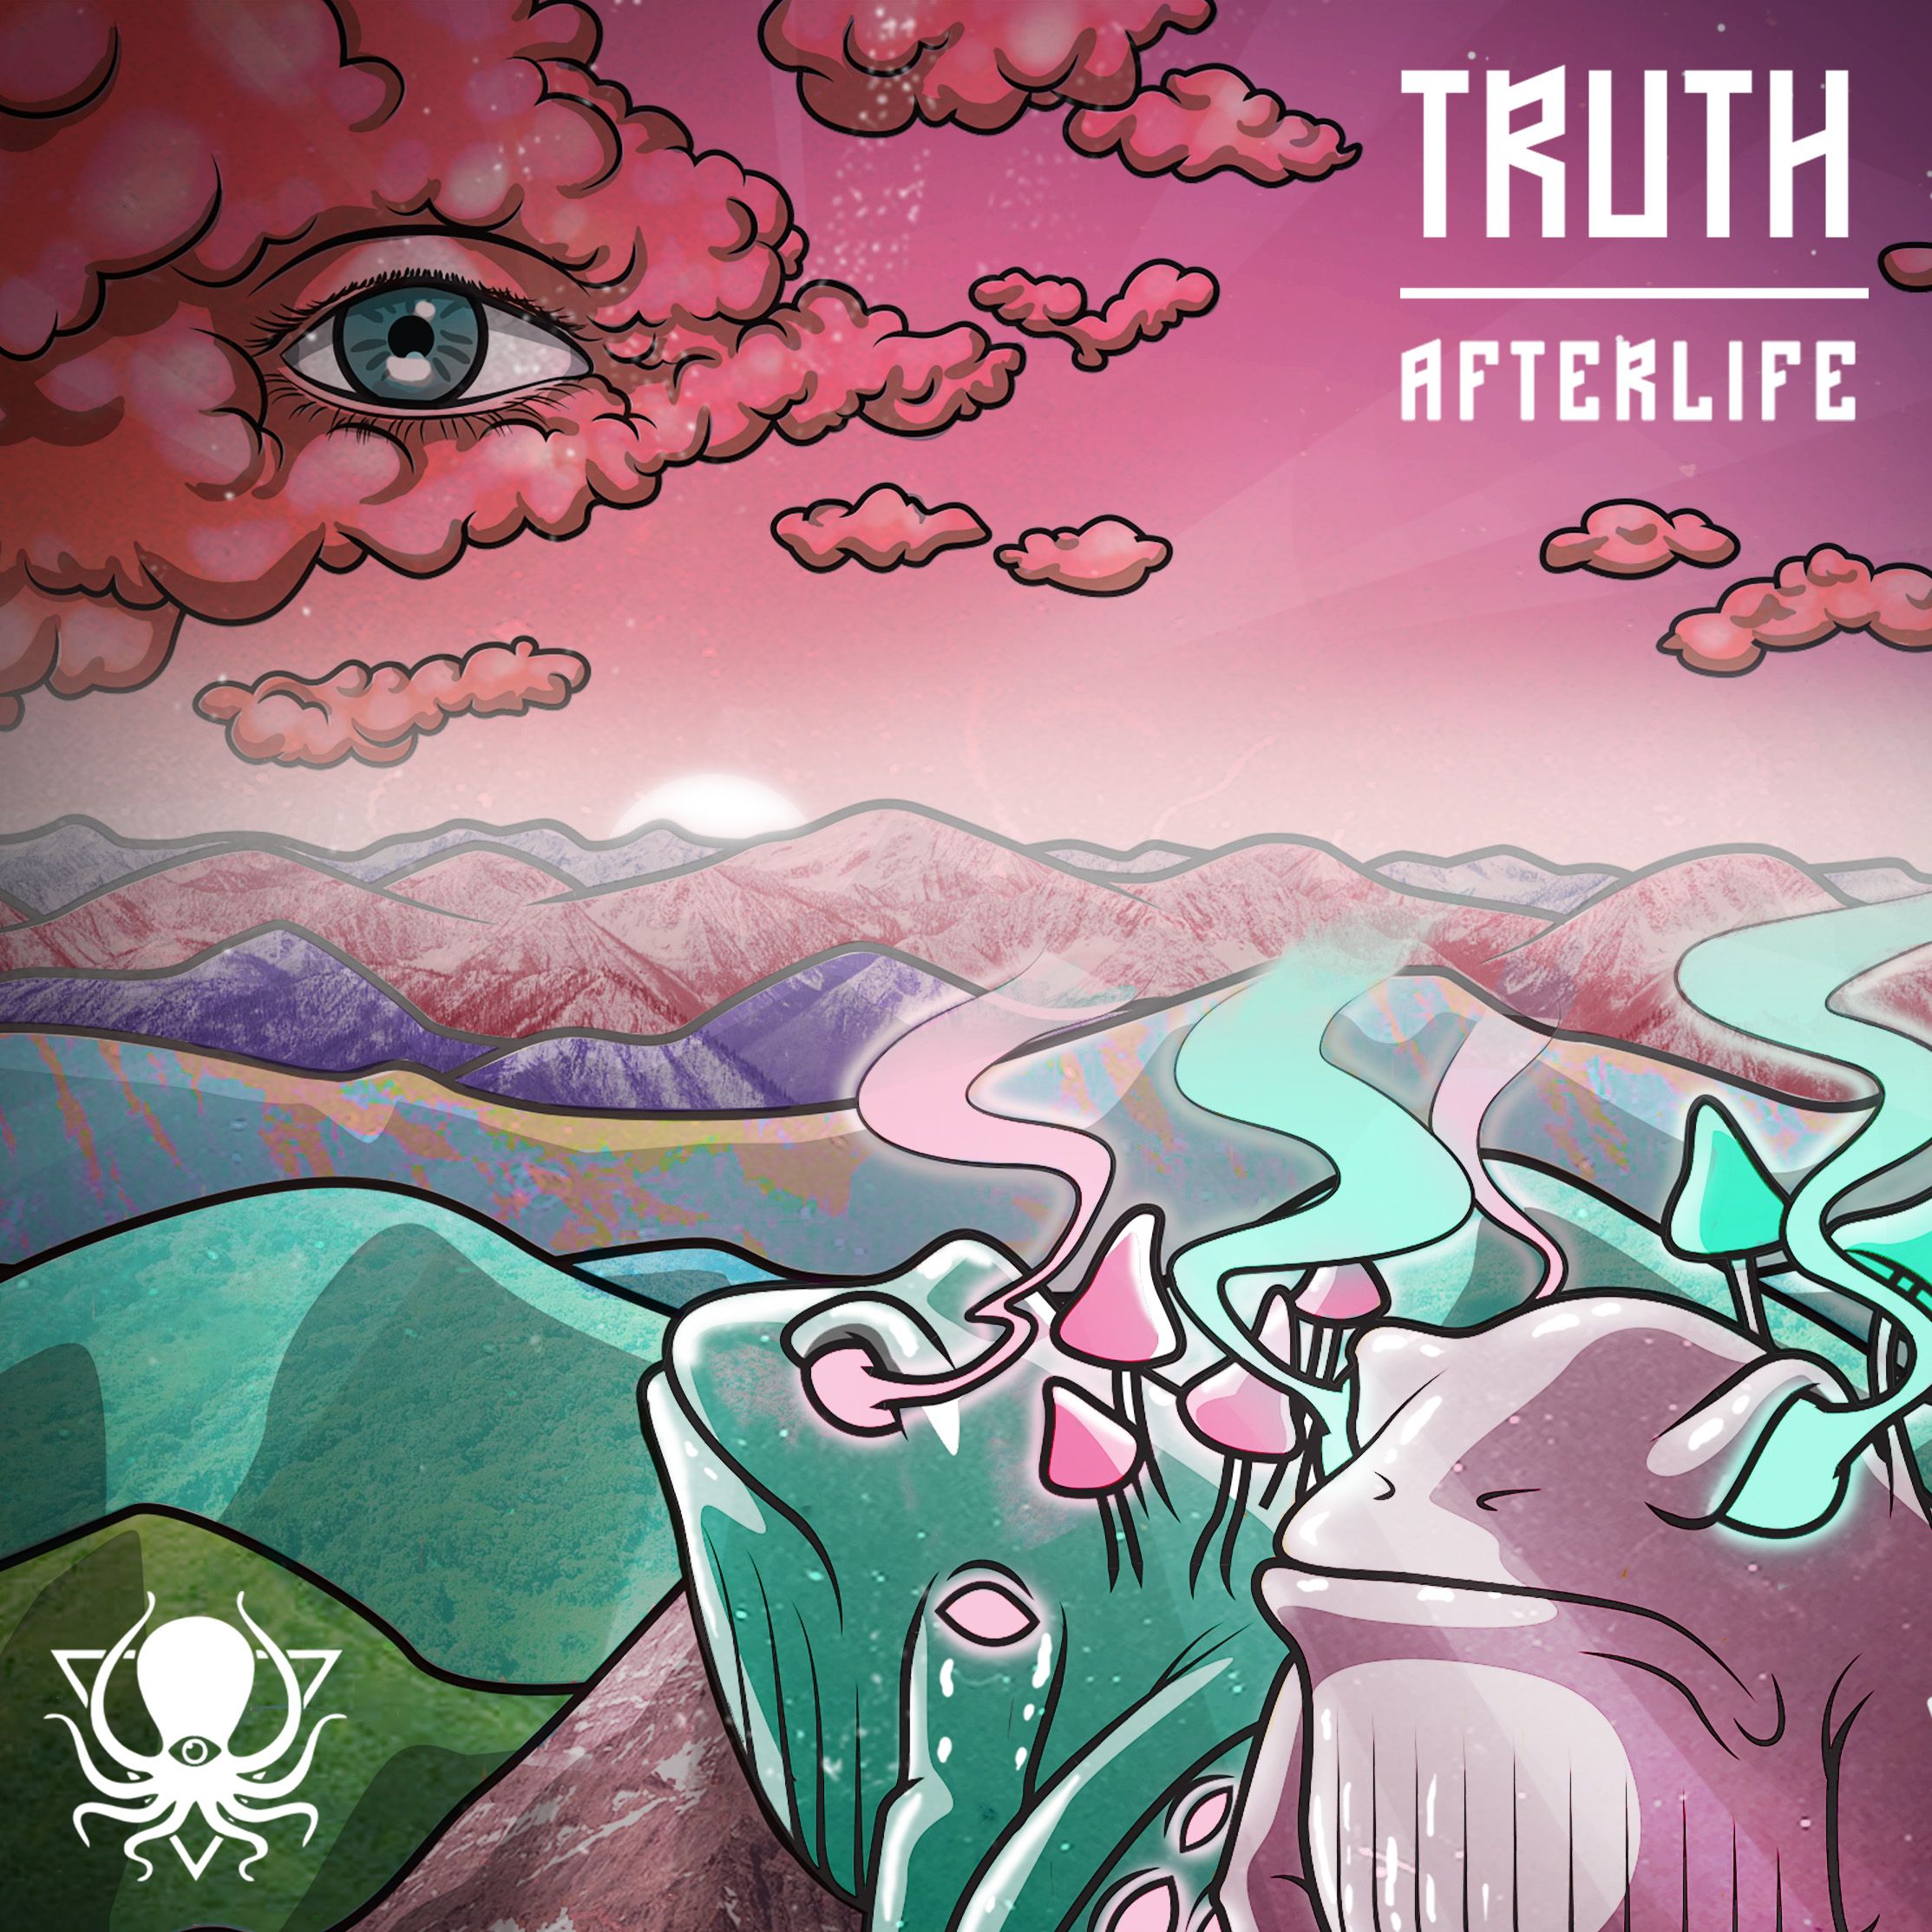 دانلود Truth - Afterlife (DDD095)